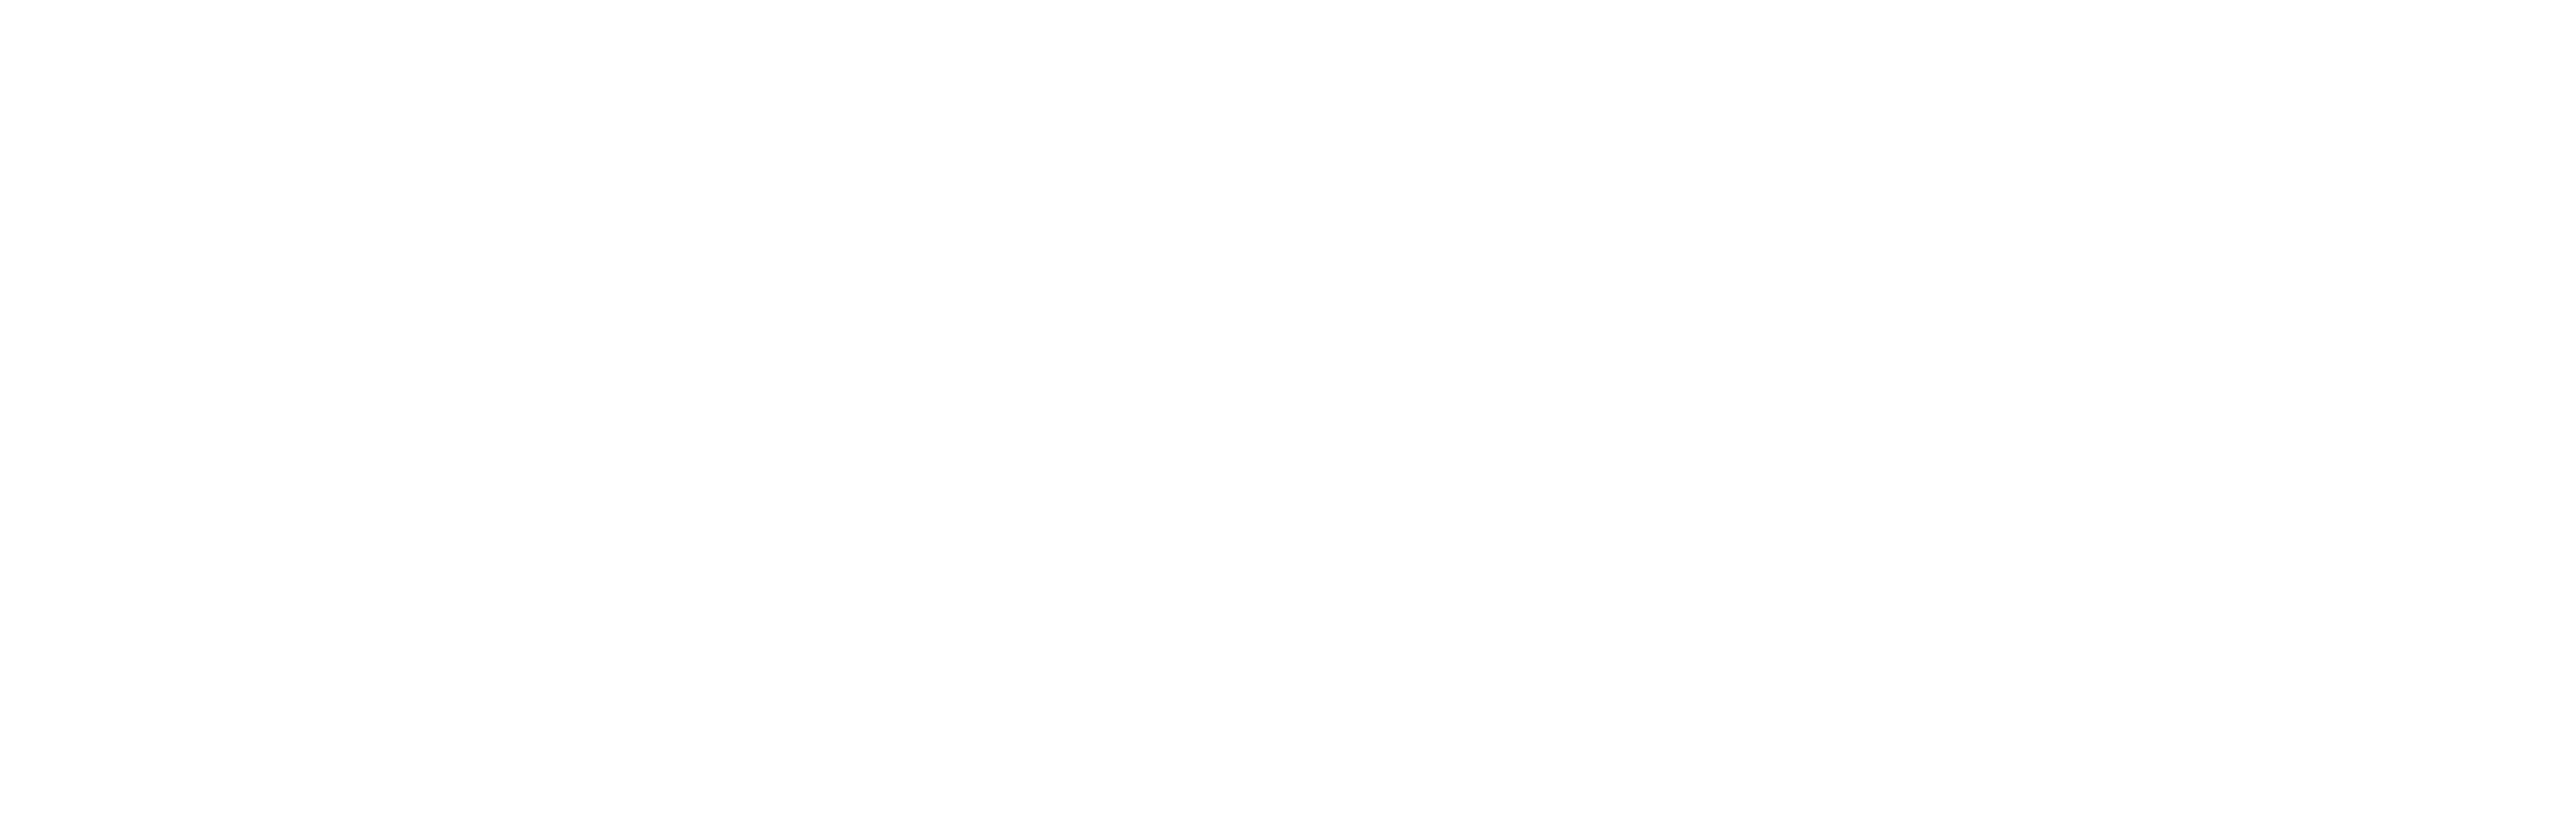 Kappa Omicron Nu Honor Society